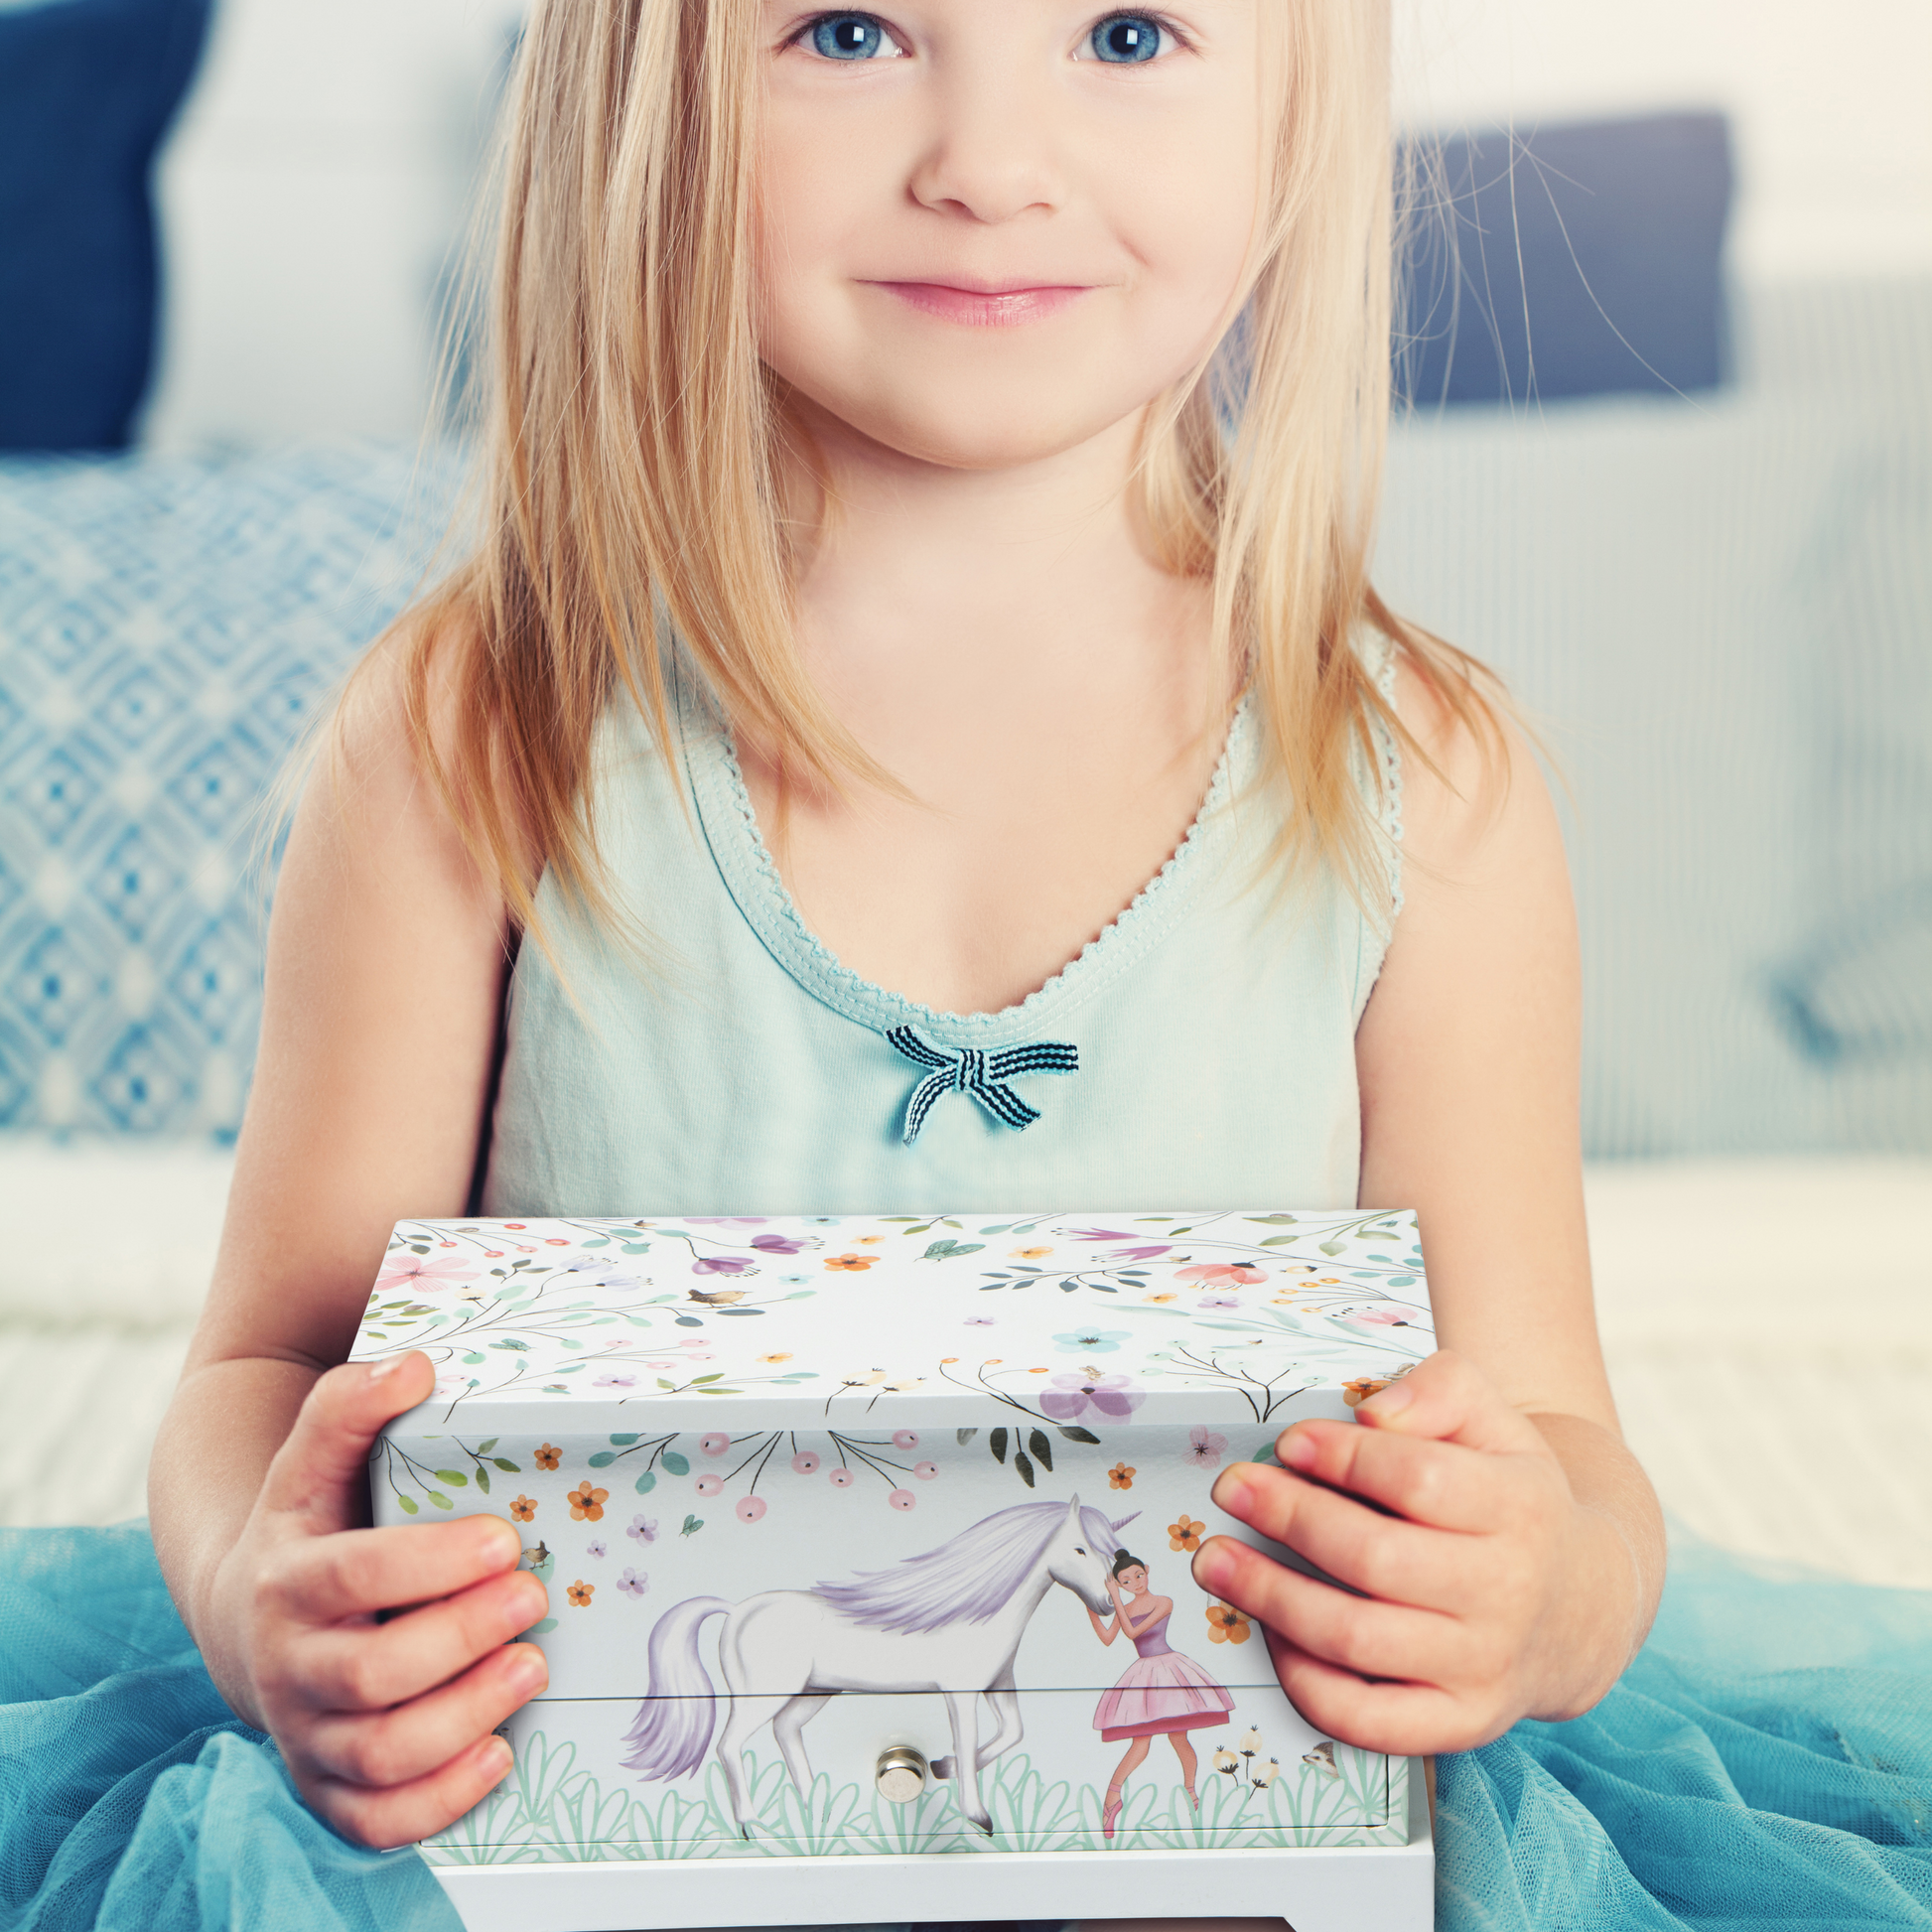 ABI + OLIE Ballerina Kids Jewelry Box for Girls - Little Girls